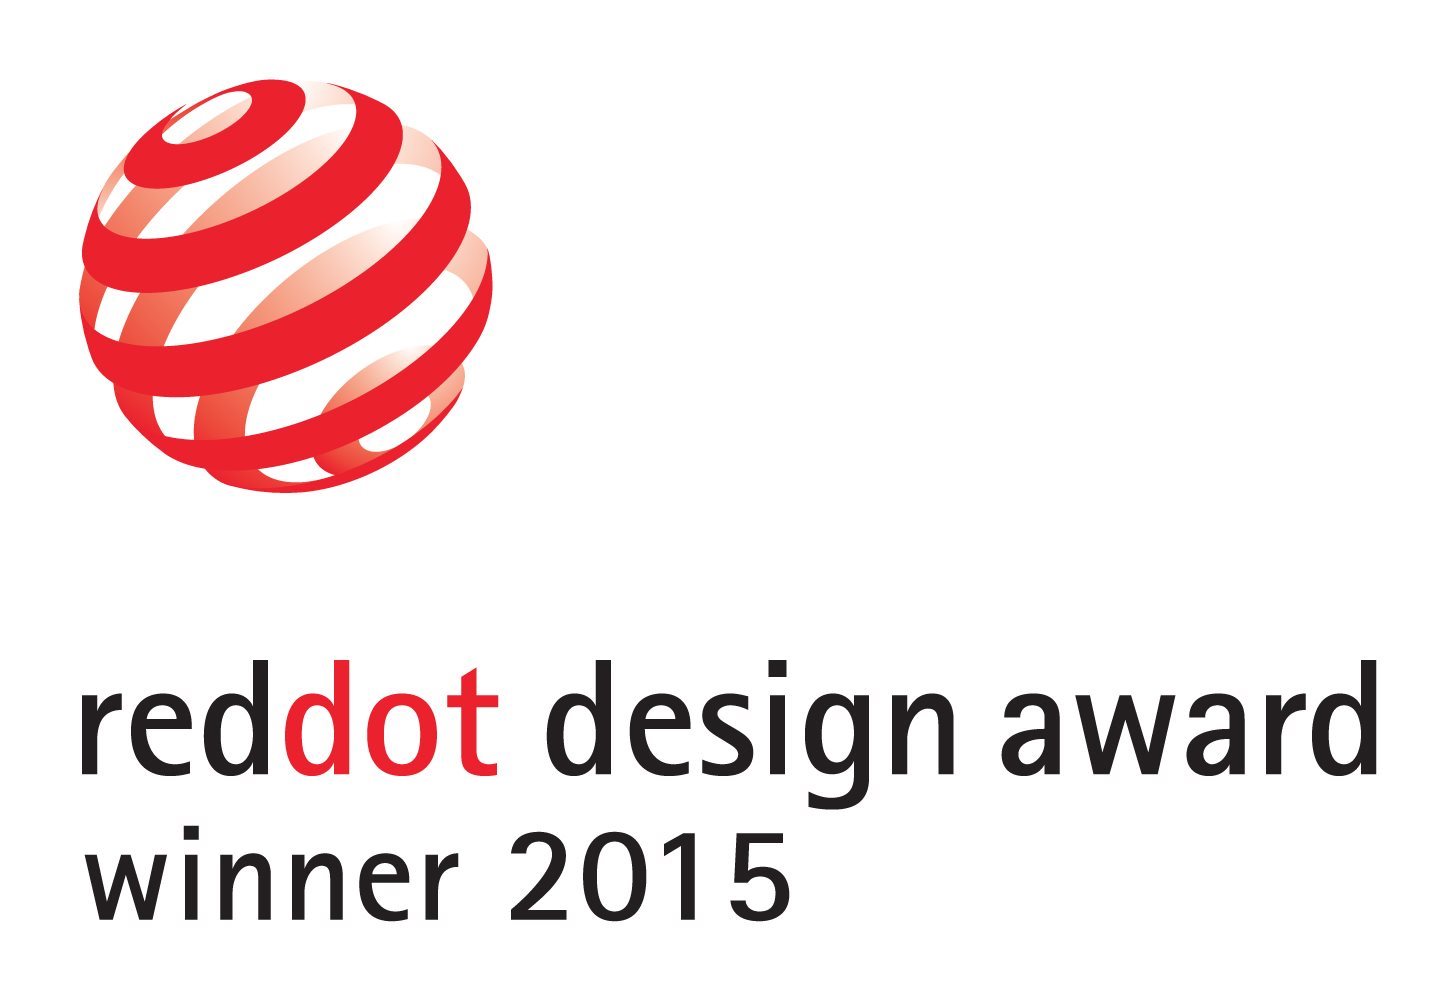 W80 wins Red Dot Design Award 2015